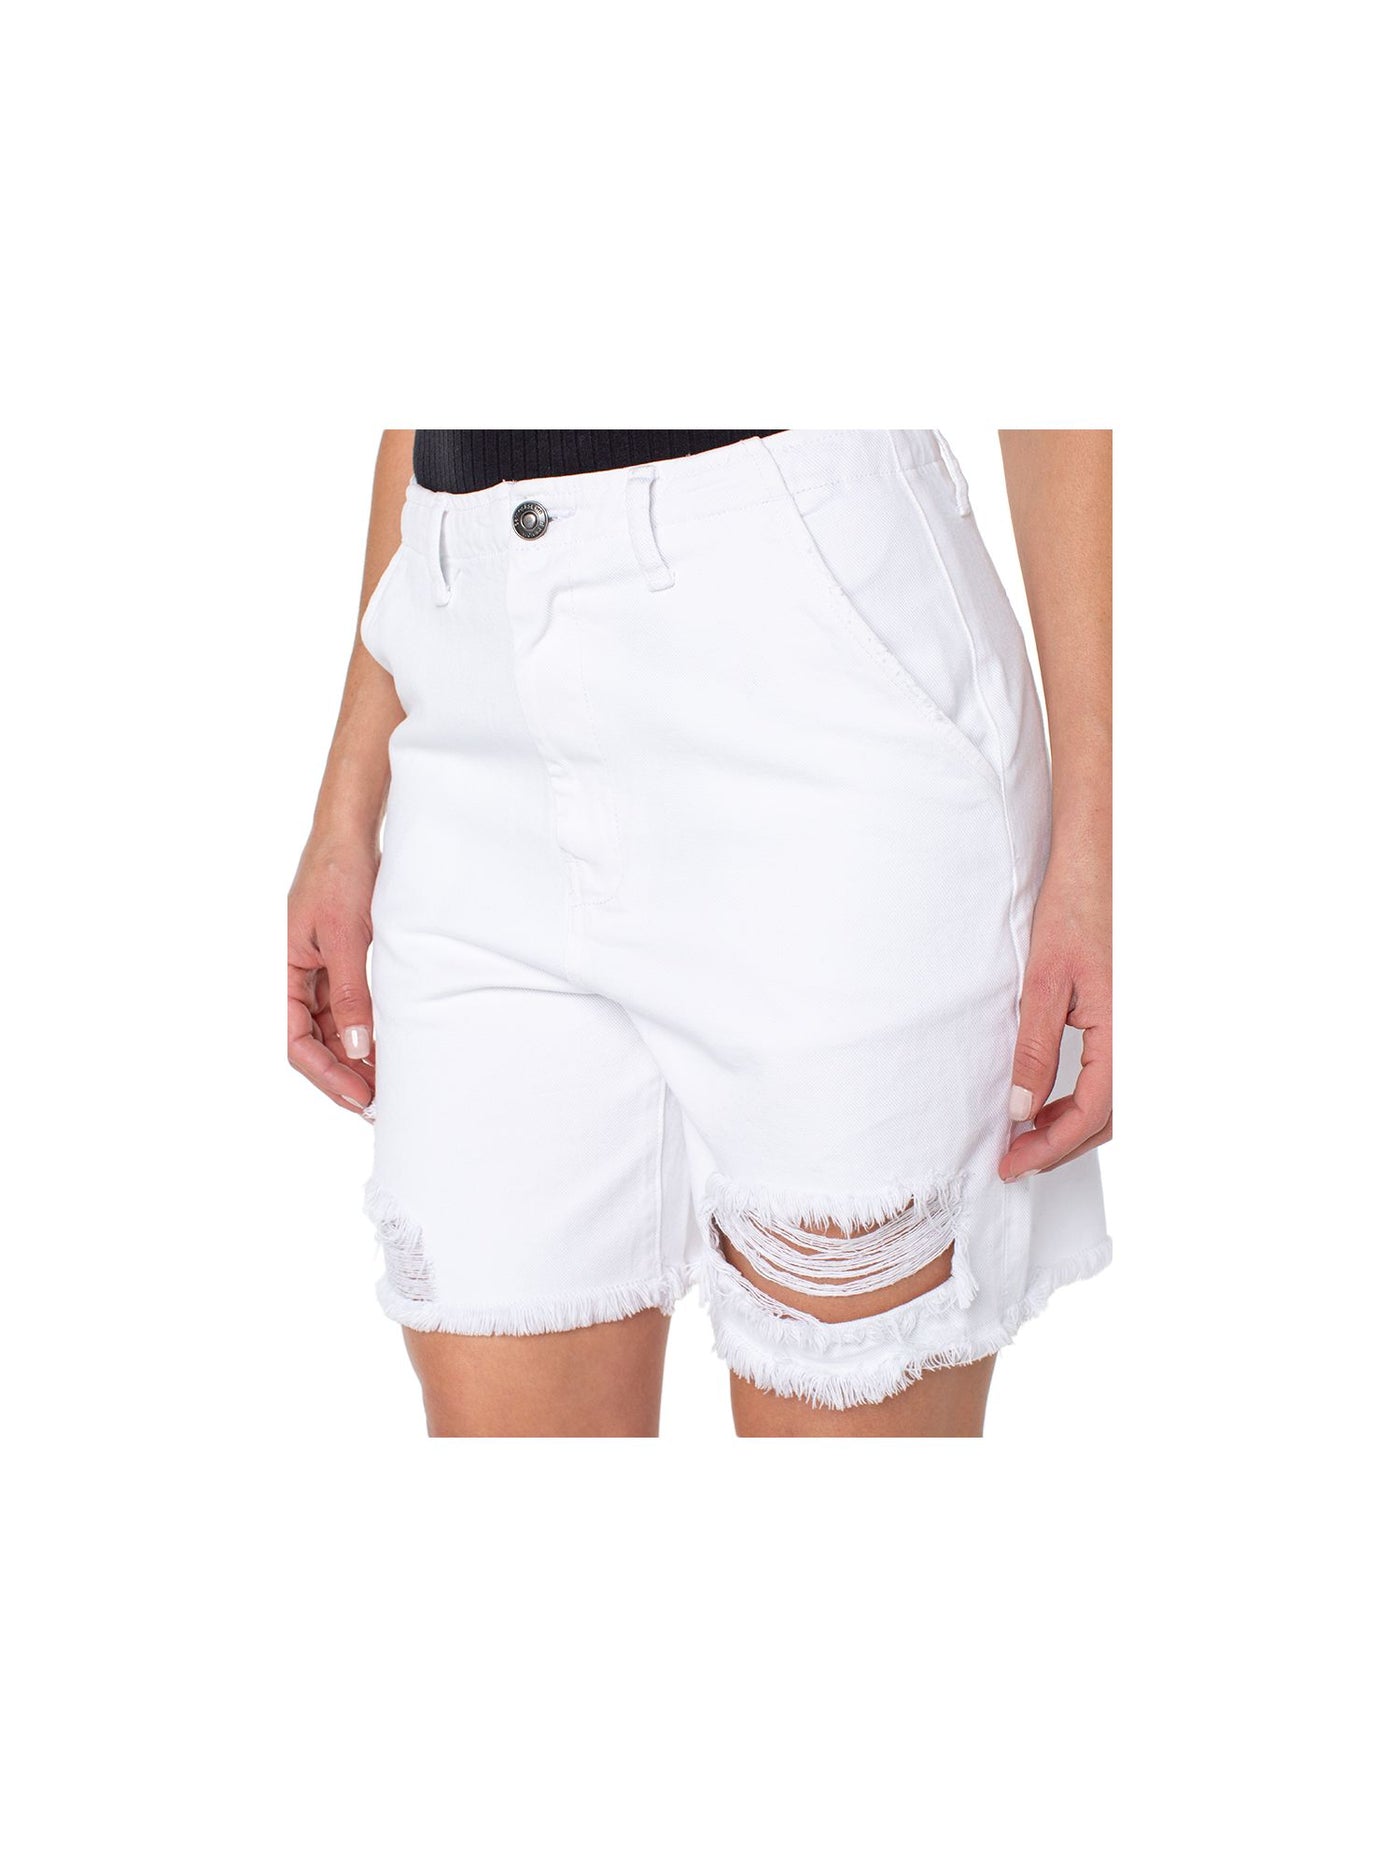 EARNEST SEWN NEW YORK Womens White Zippered Pocketed Frayed Hems High Waist Shorts Juniors 31